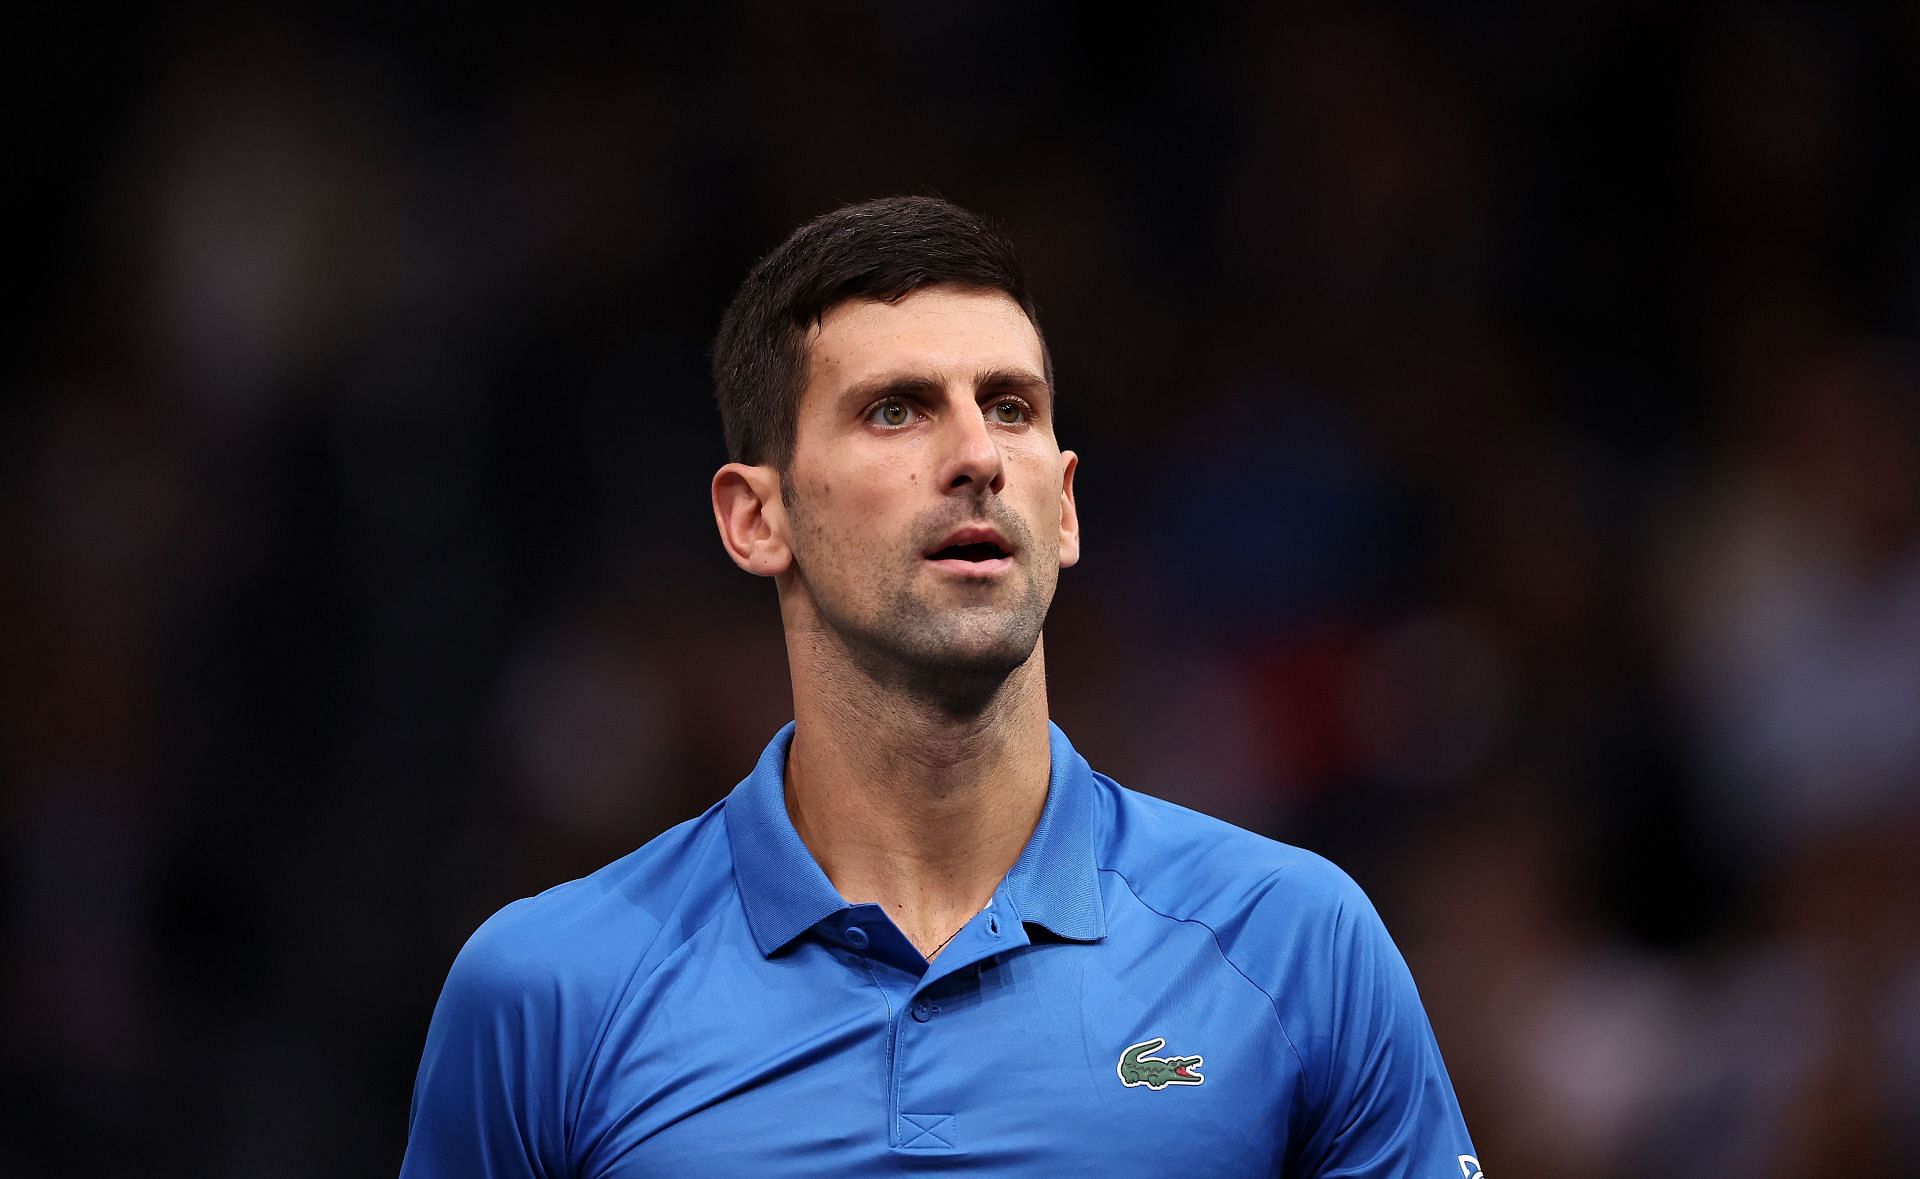 Novak Djokovic at the 2022 Paris Masters.